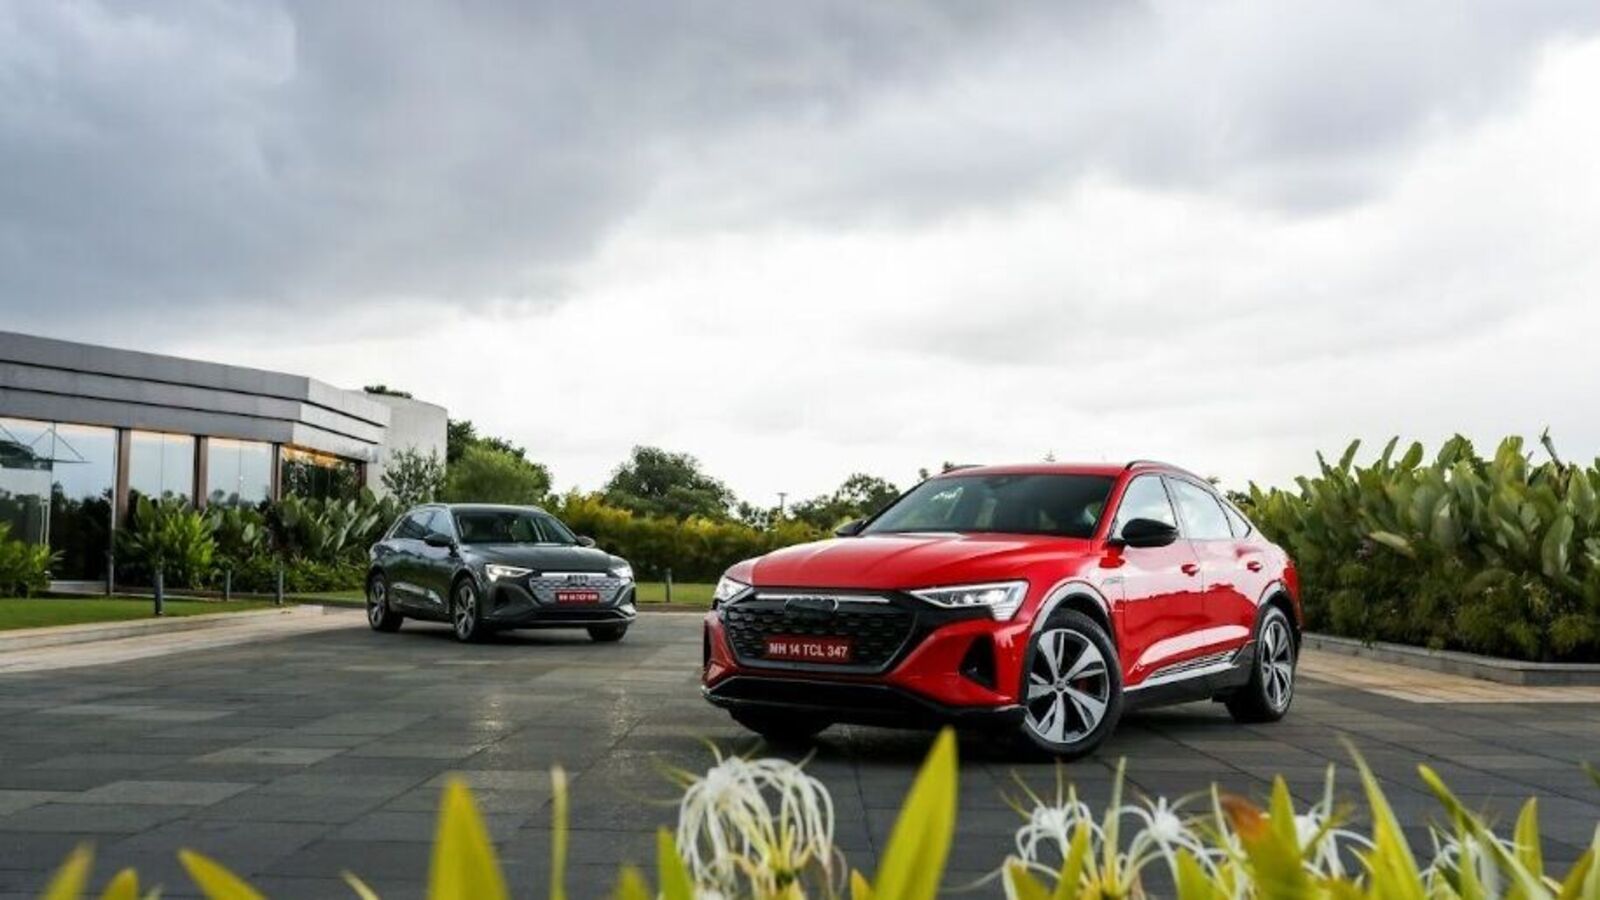 Audi Q8 E-Tron News and Reviews